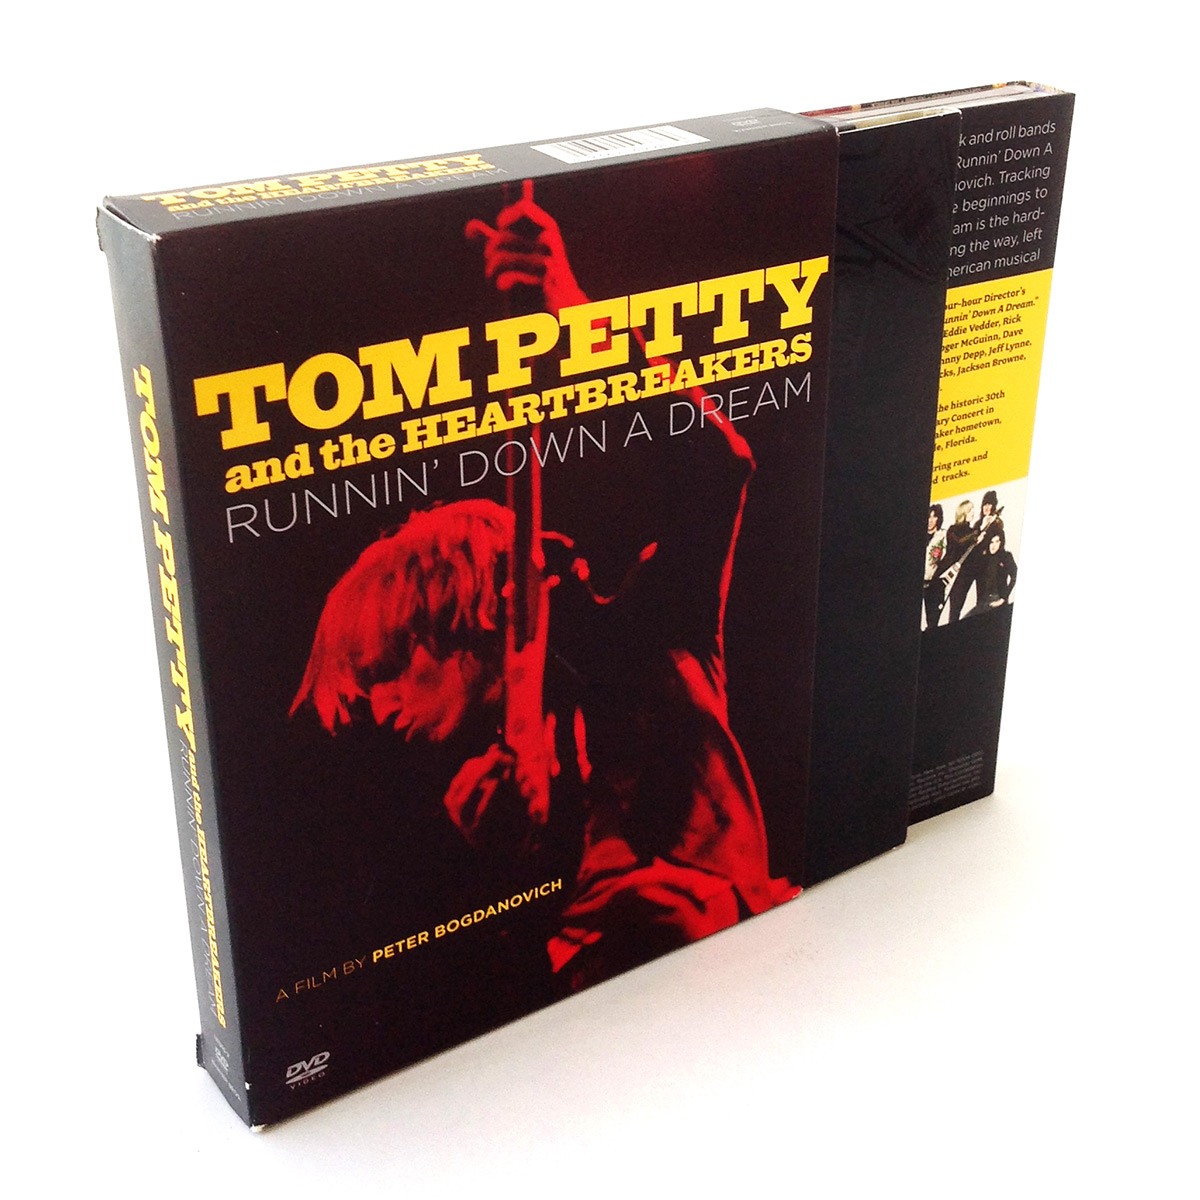 Tom Petty Boxset 2 - DVD Replication Services